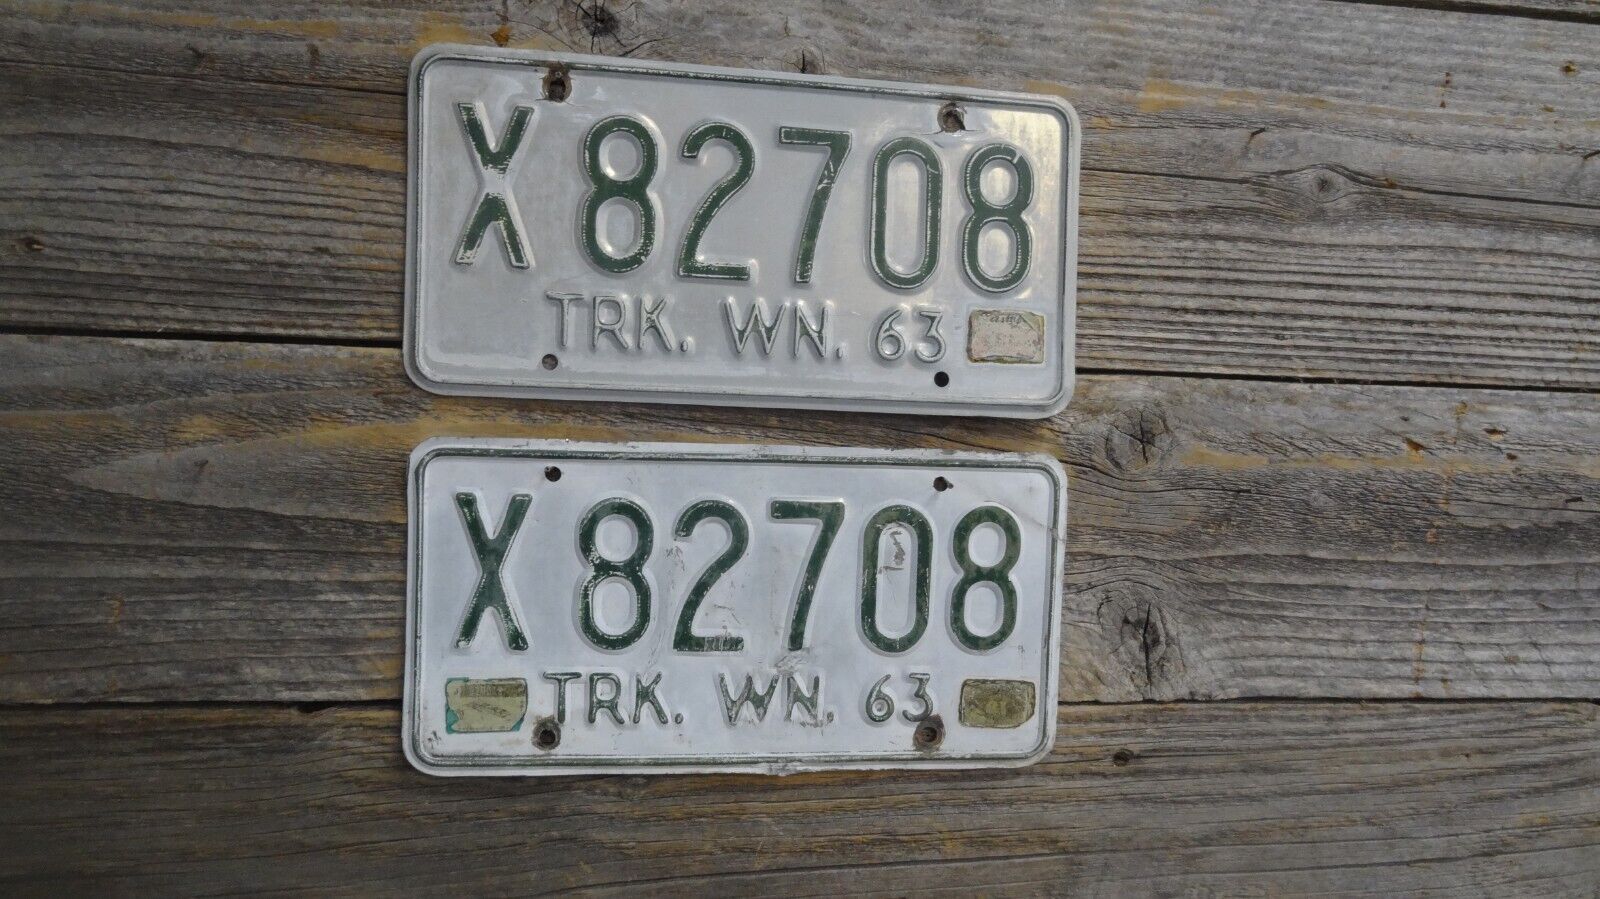 1963 Washington Truck 63-82 YOM Original embossed license plates pair Great